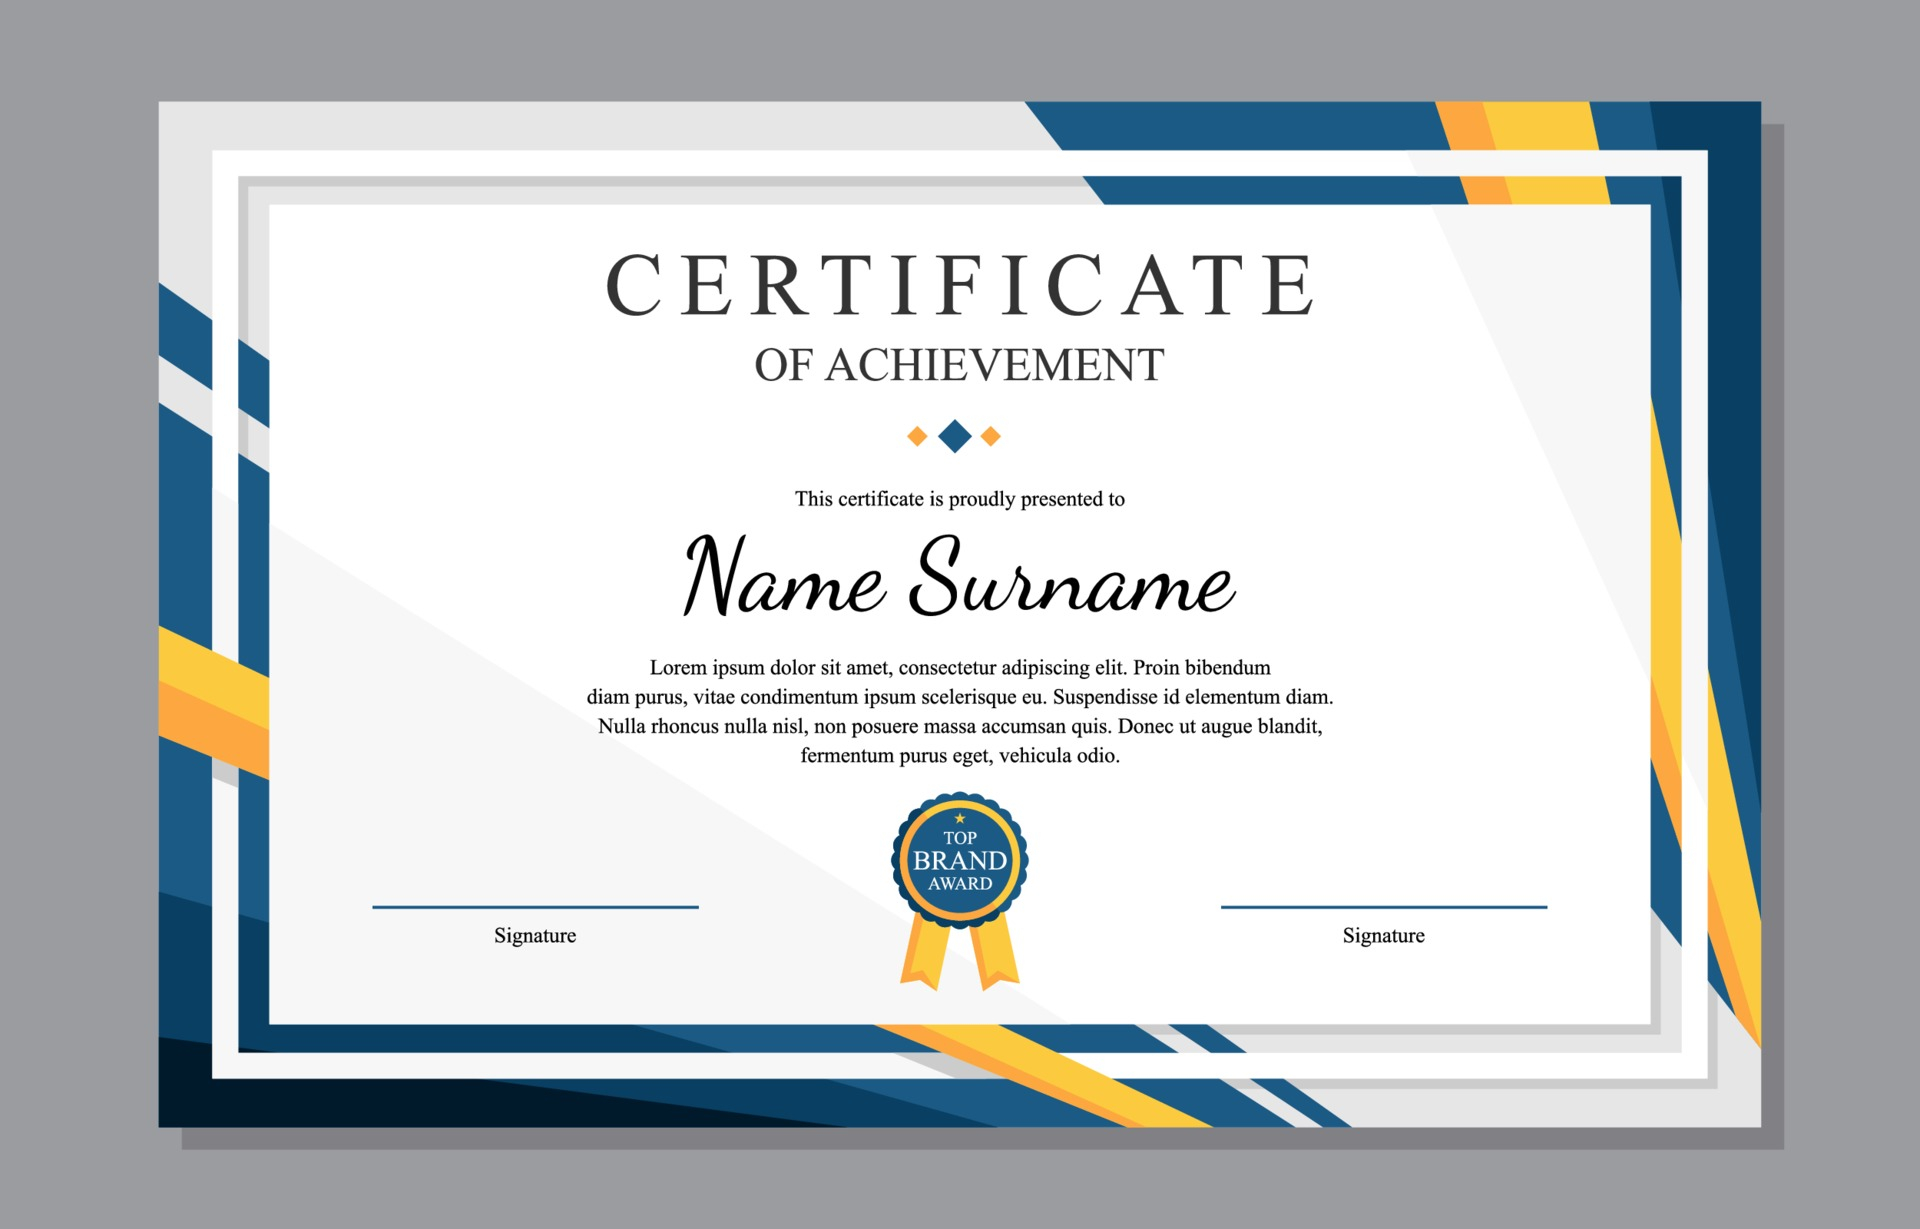 Certificate Templates, Free Certificate Designs Inside Art Certificate Template Free